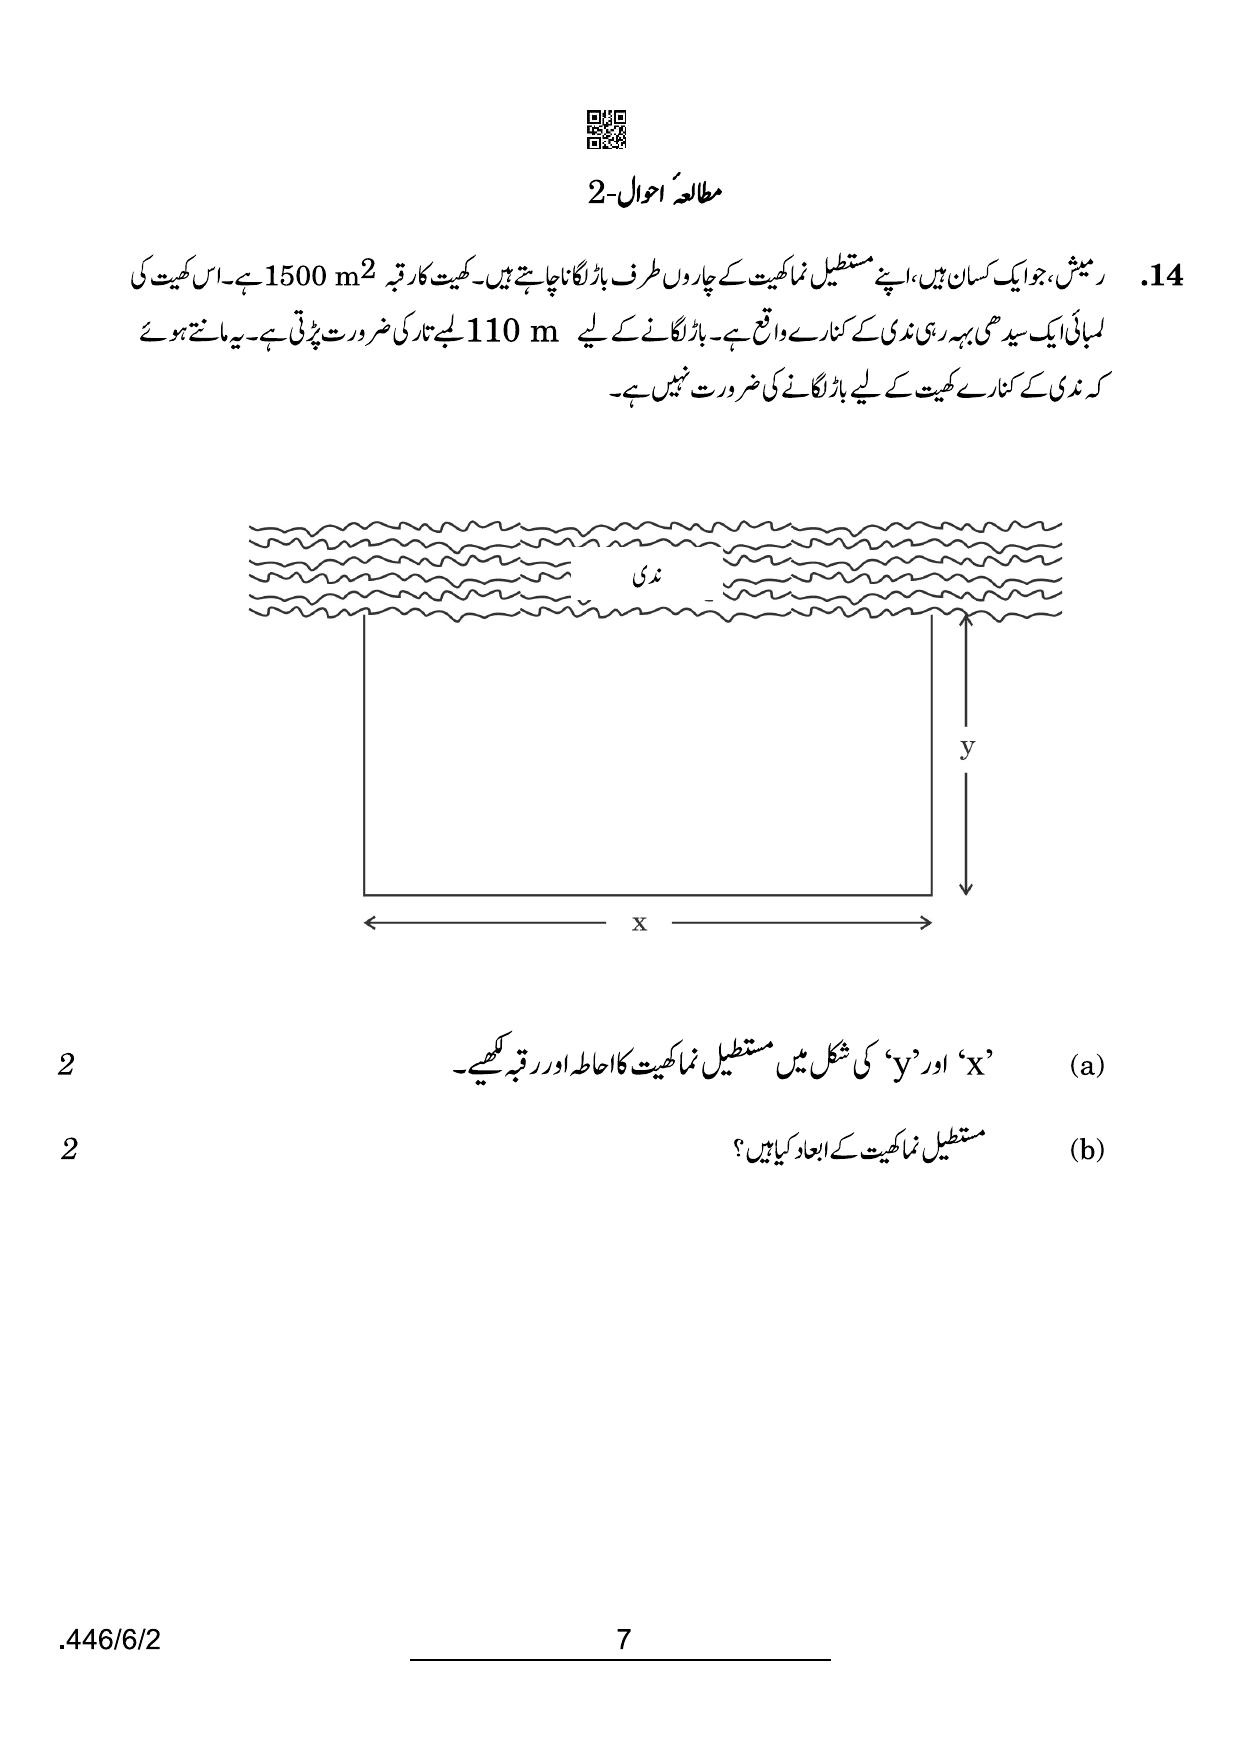 CBSE Class 10 446-6-2 Maths Basic Urdu 2022 Compartment Question Paper - Page 7